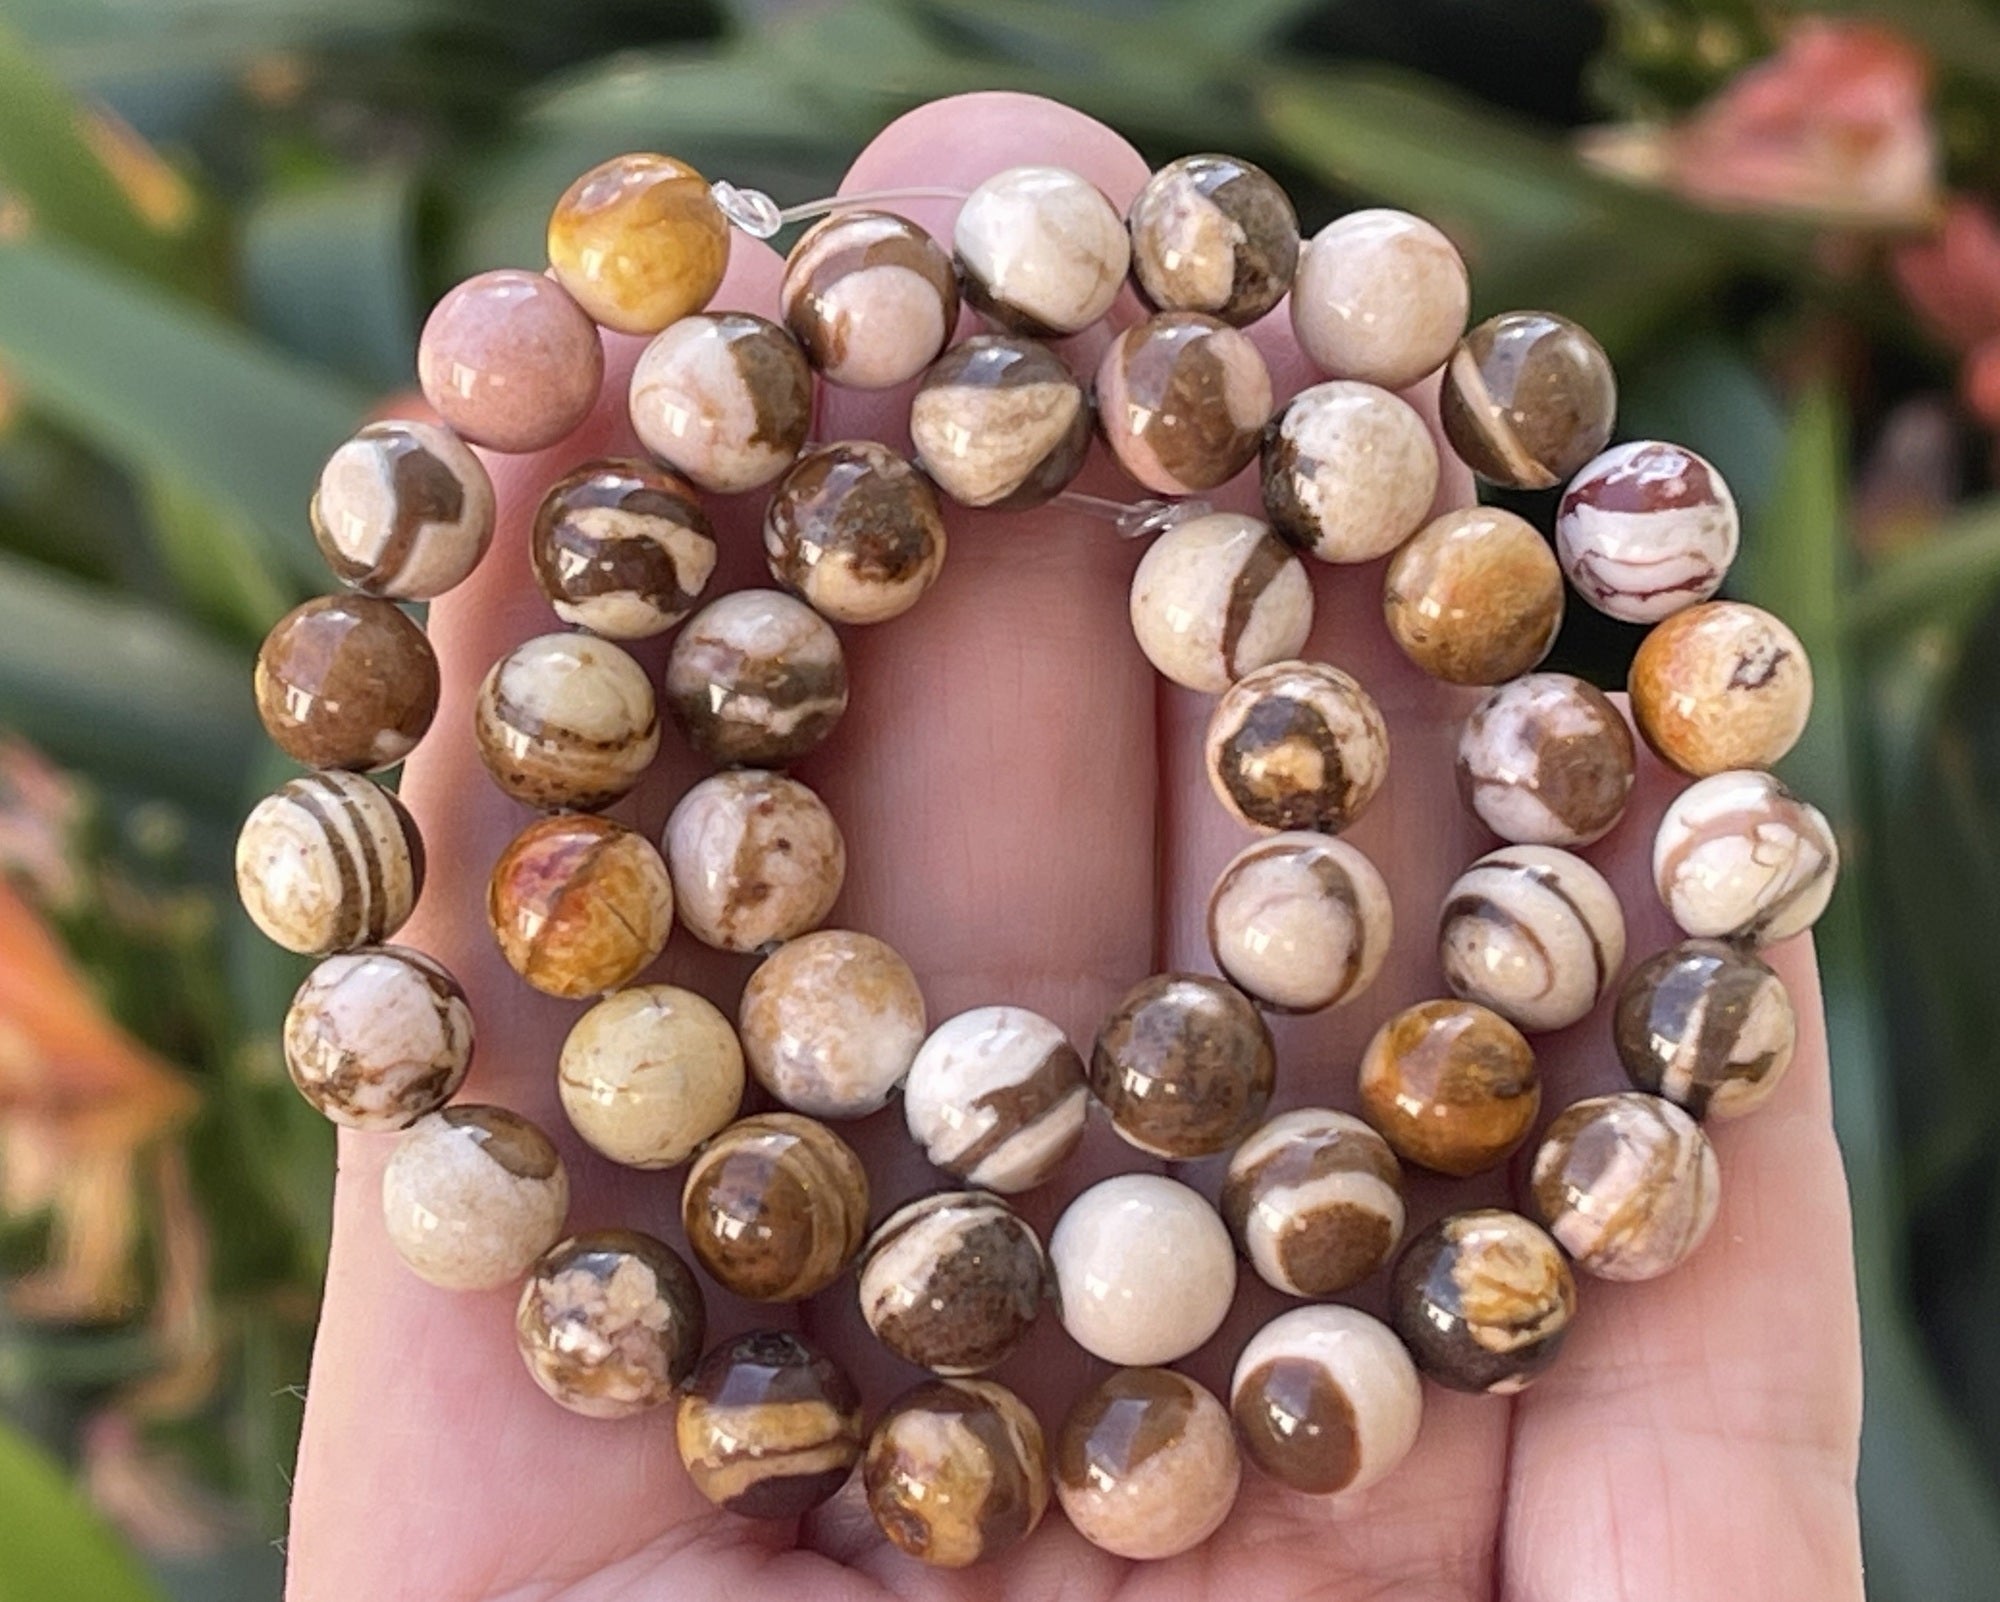 Australian Zebra Jasper 8mm round natural gemstone beads 15.5" strand - Oz Beads 